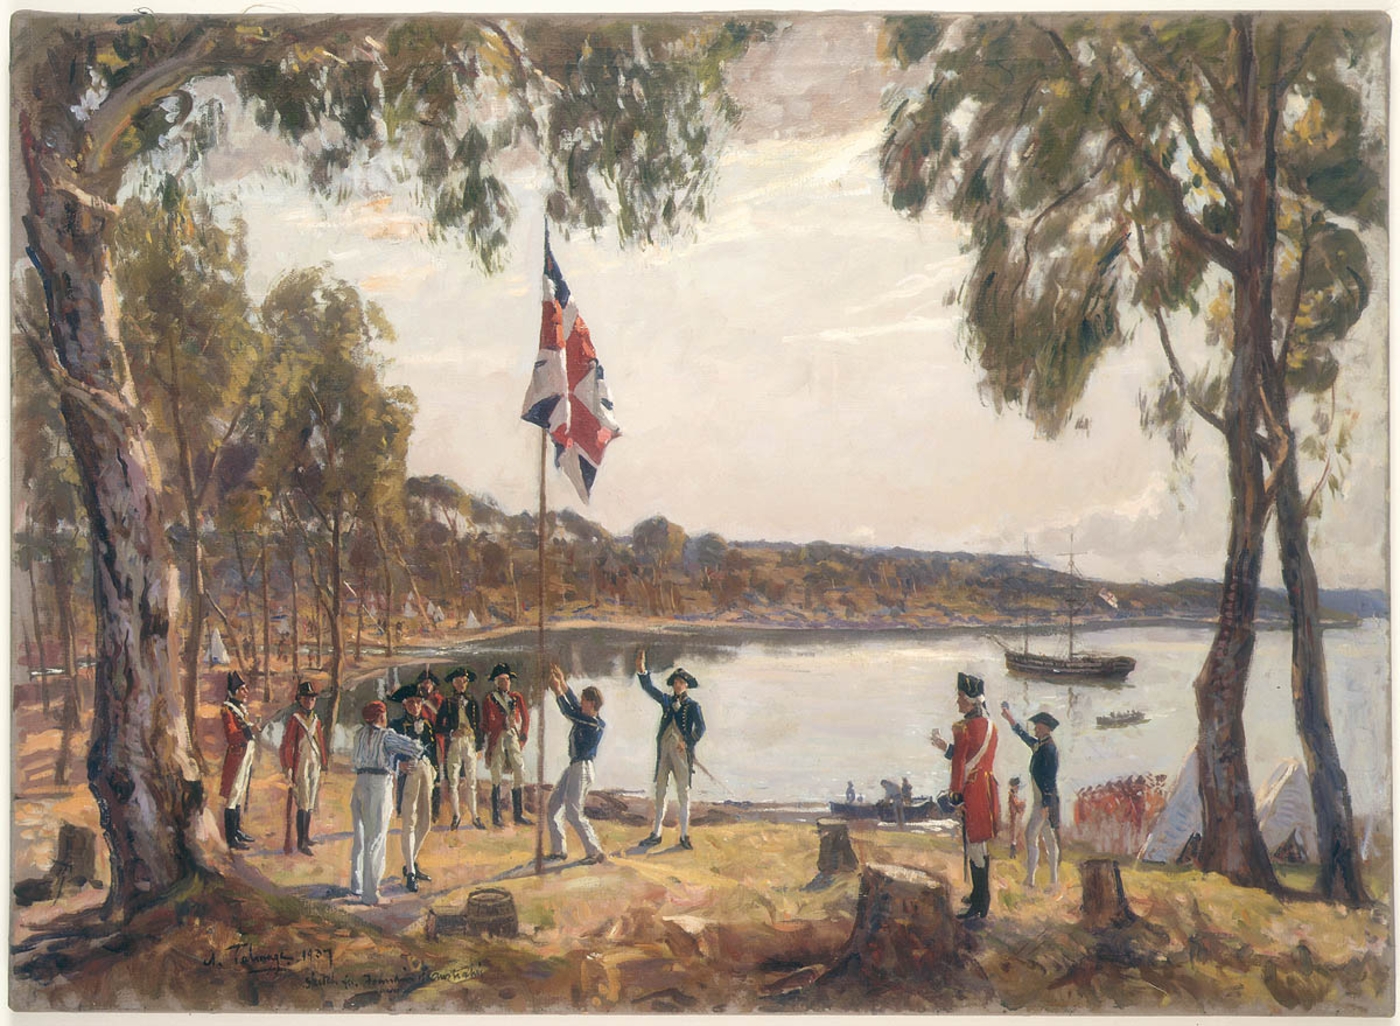 The_Founding_of_Australia._By_Capt._Arthur_Phillip_R.N._Sydney_Cove,_Jan._26th_1788.jpg